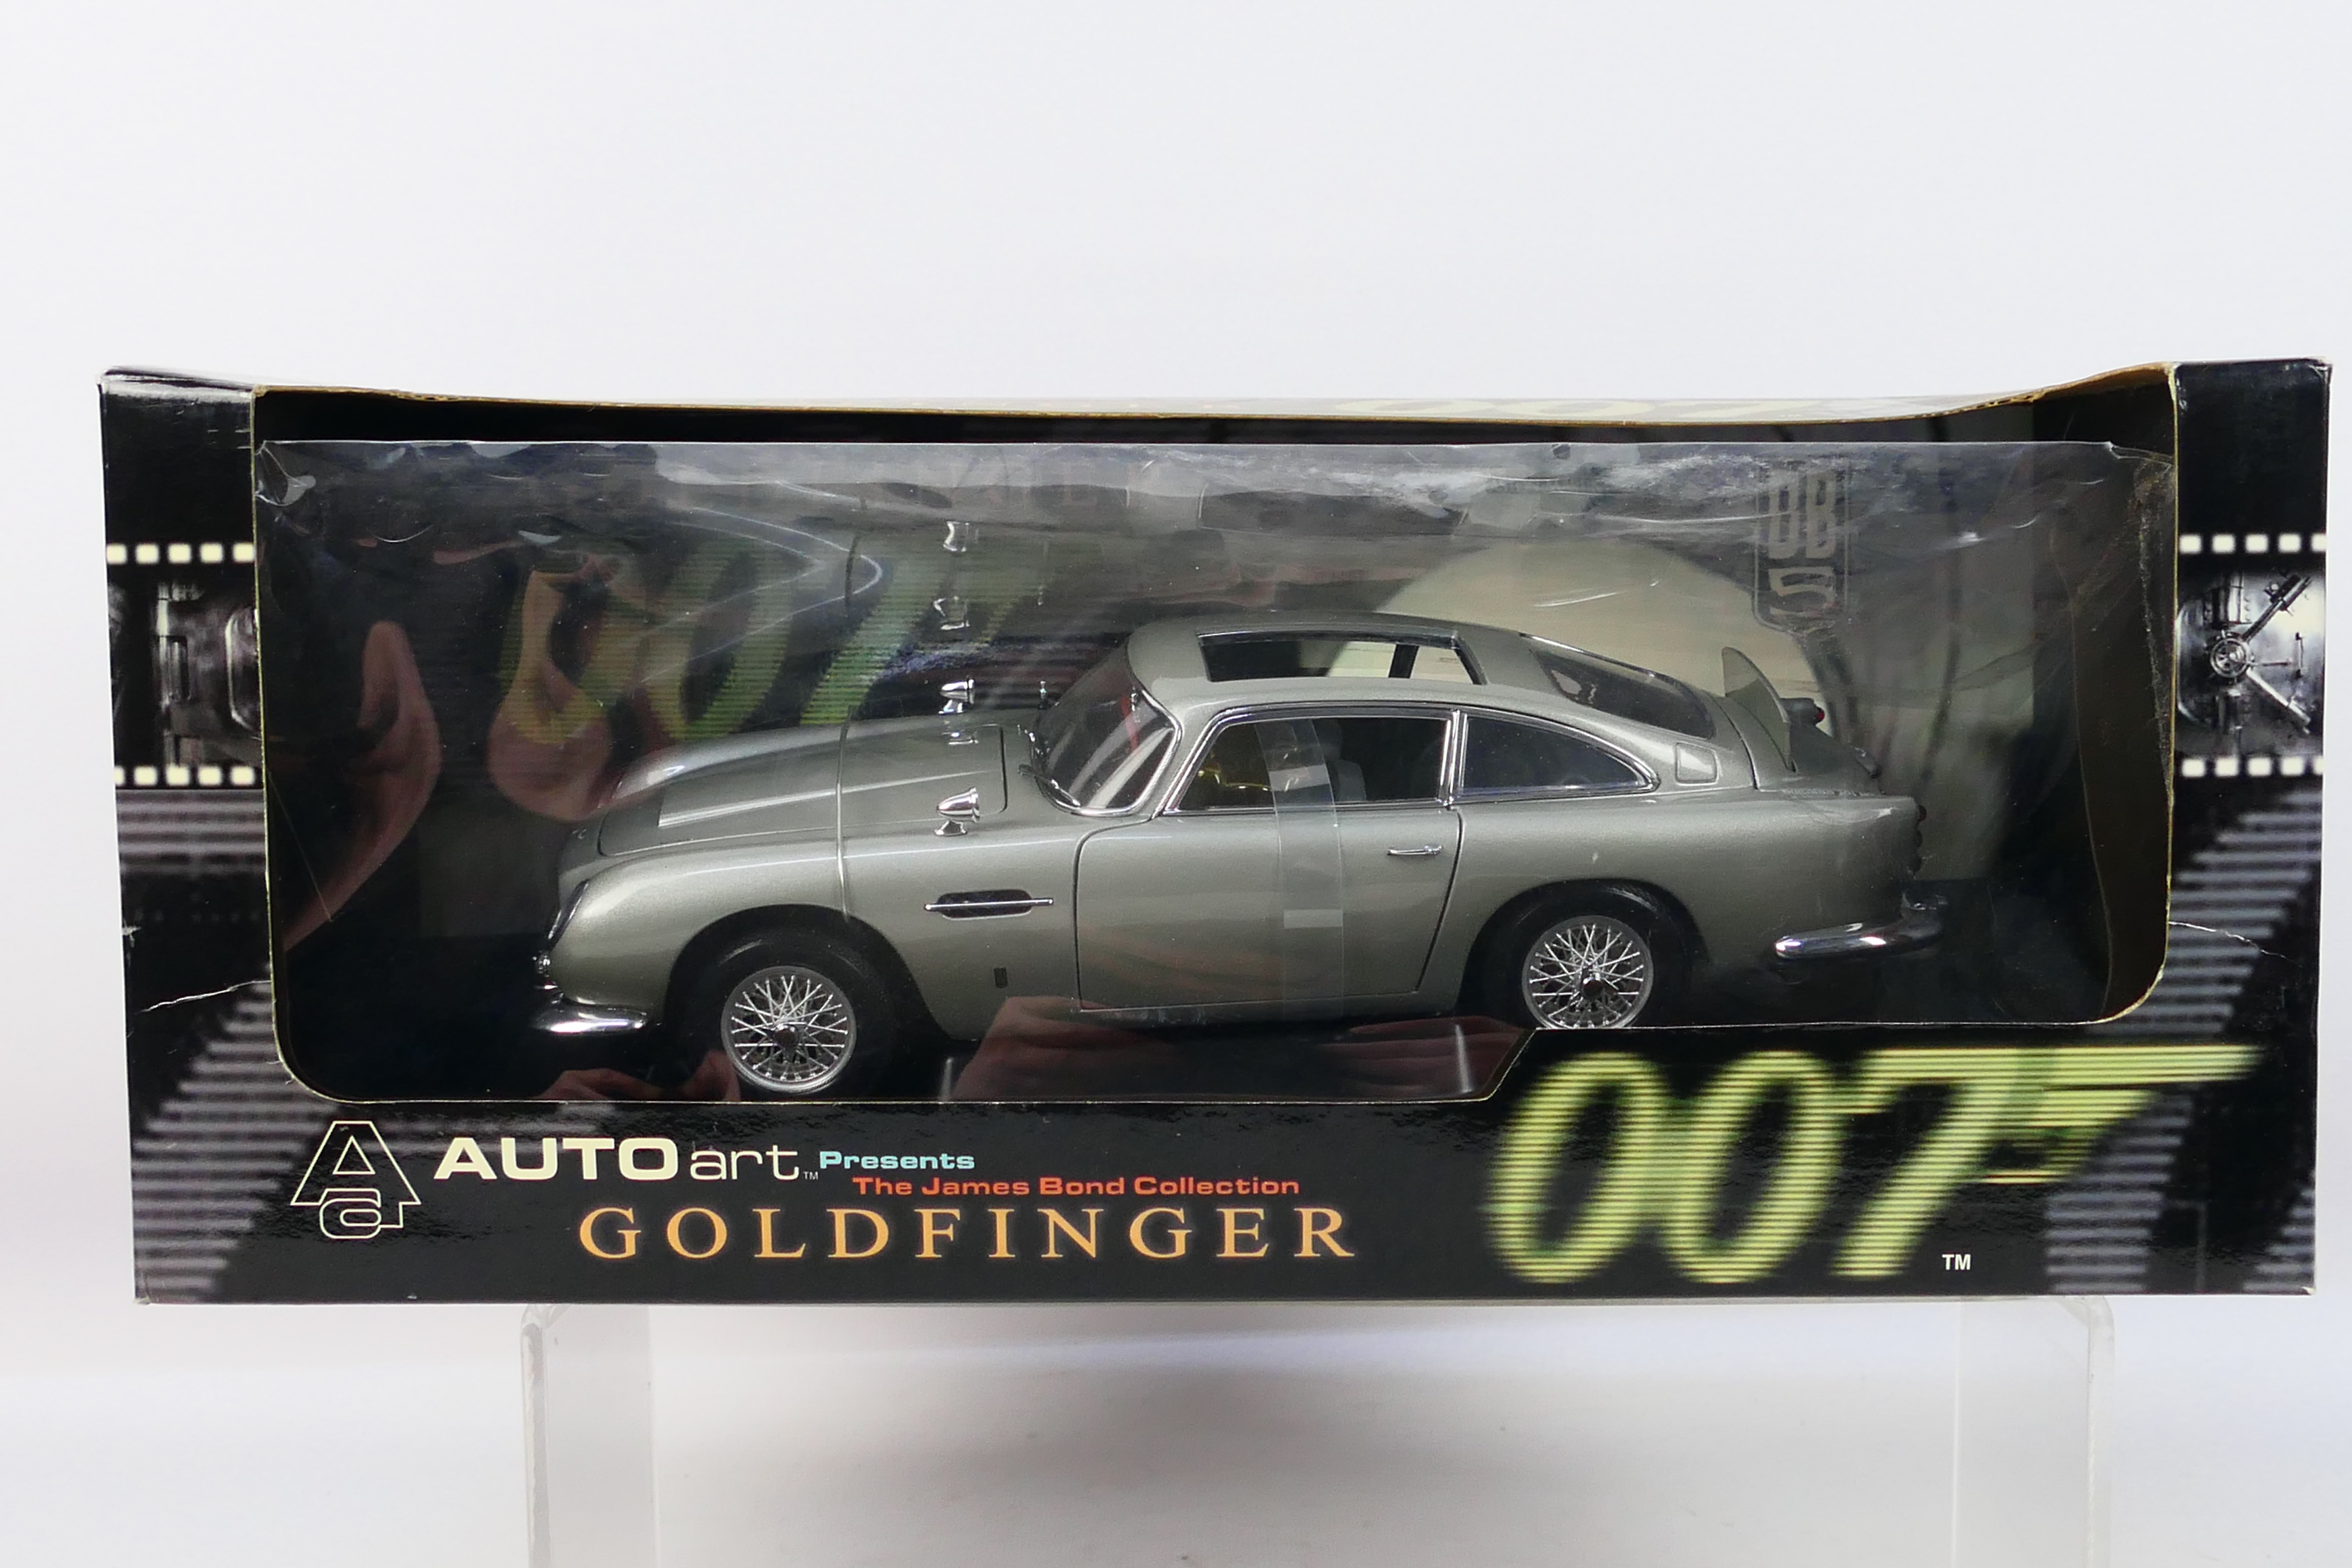 AutoArt - A boxed AutoArt #70021 1:18 scale 'Goldfinger' James Bond's Aston Martin DB5.